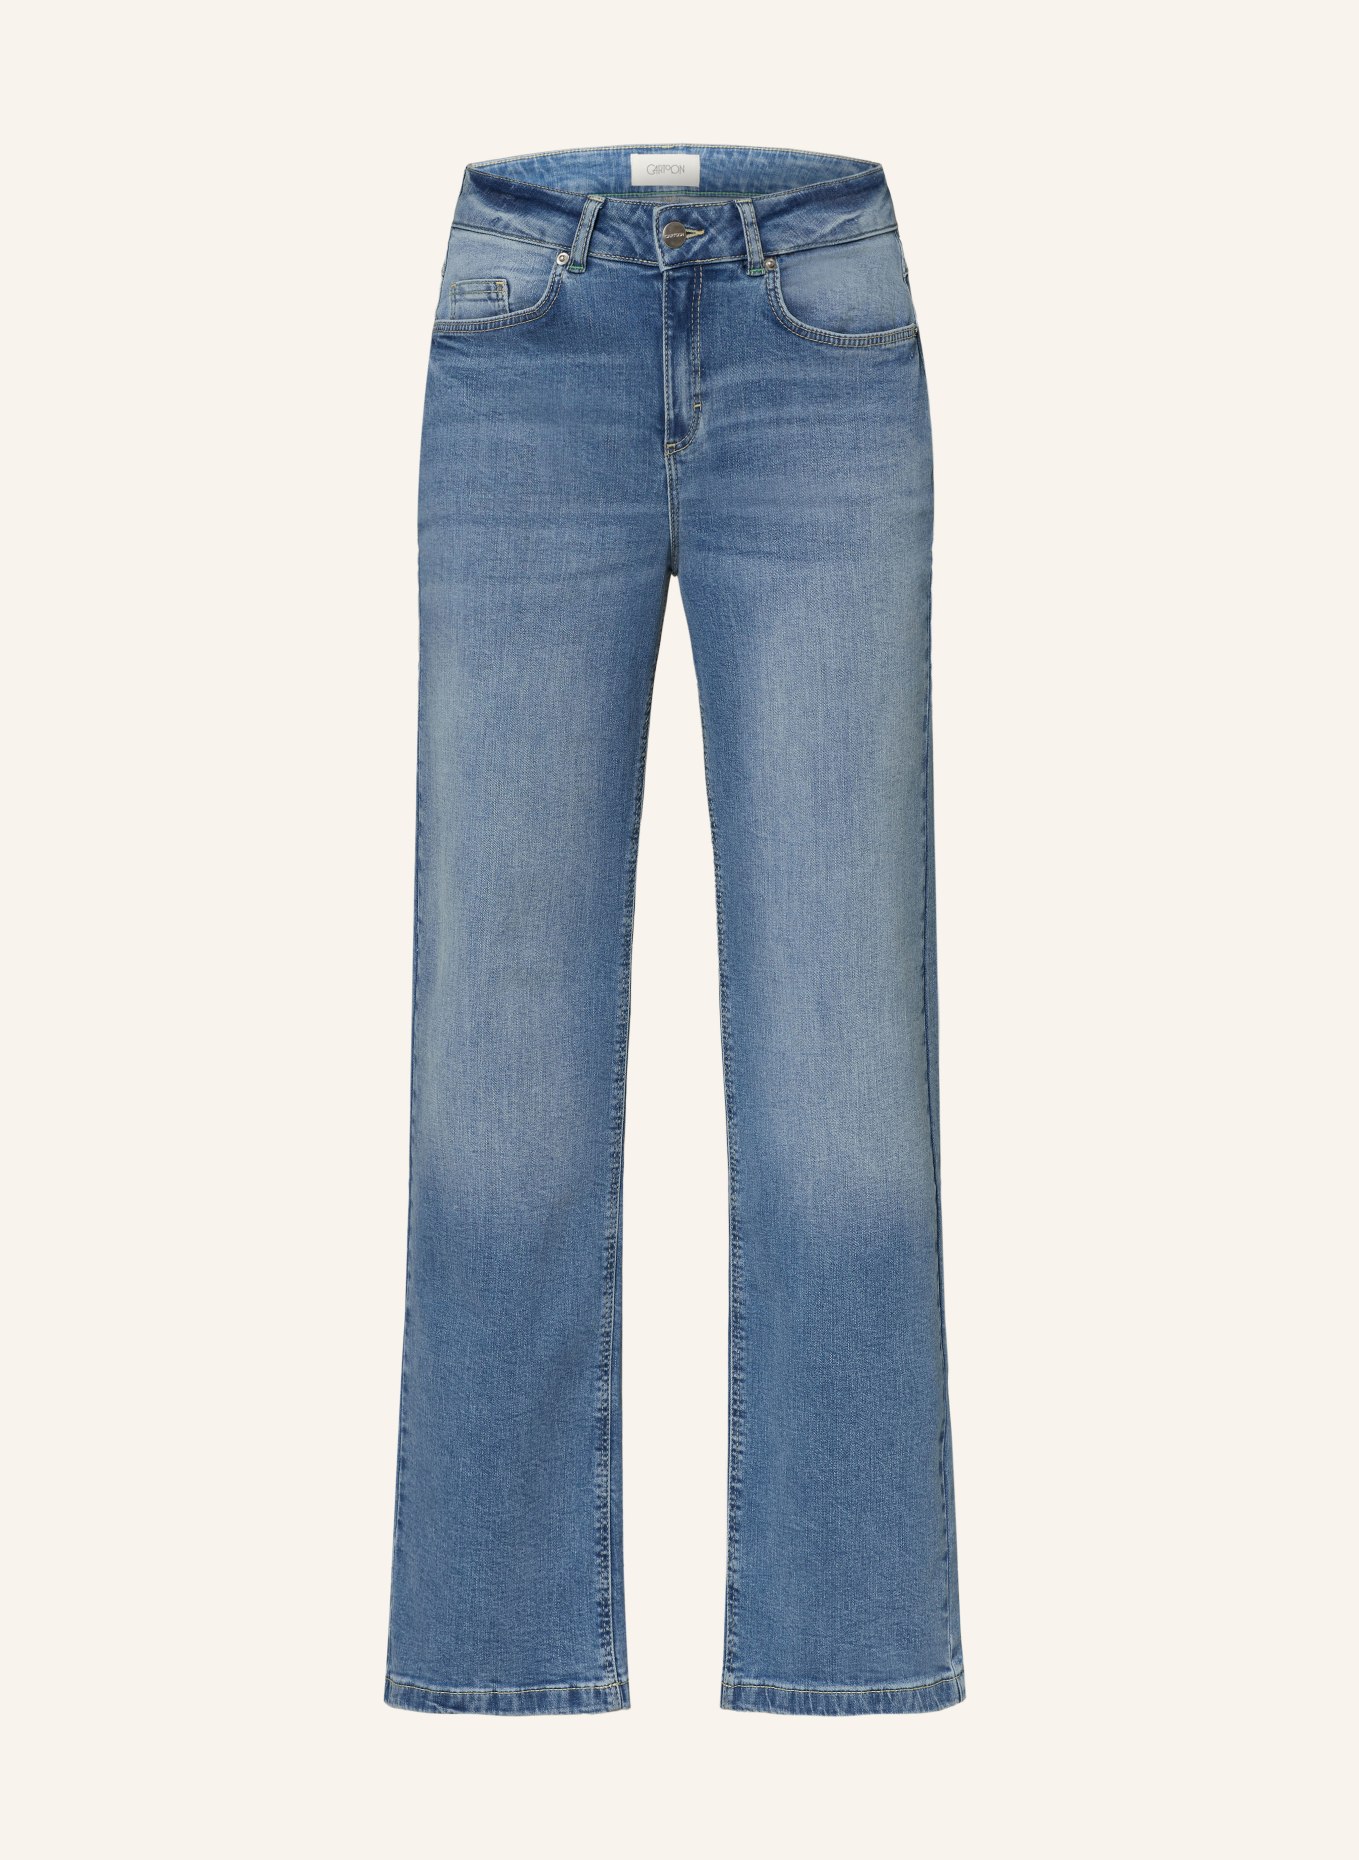 CARTOON Flared Jeans, Farbe: 8619 MIDDLE/BLUE/DENIM (Bild 1)